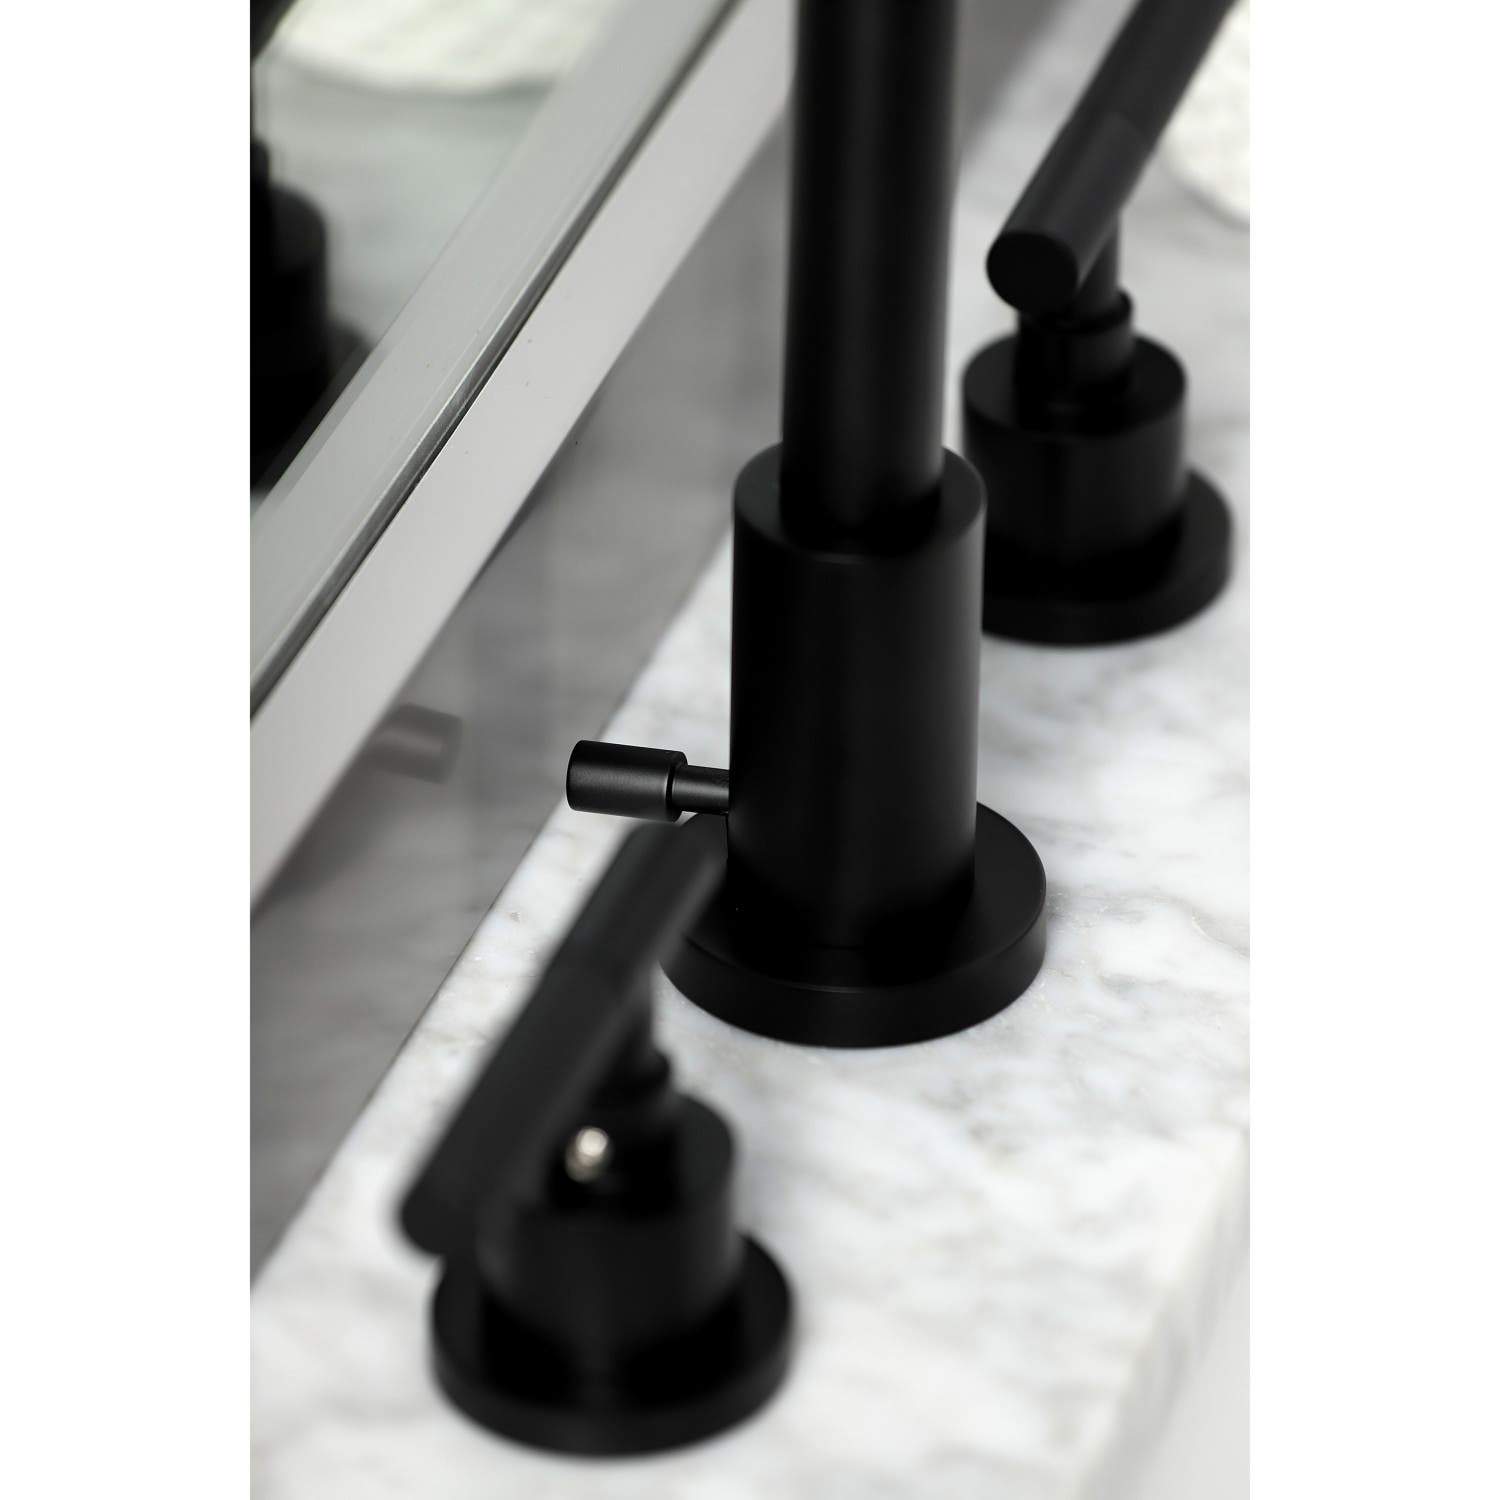 Kingston Brass Fauceture FSC892XCKL-P Kaiser Widespread Bathroom Faucet with Brass Pop-Up